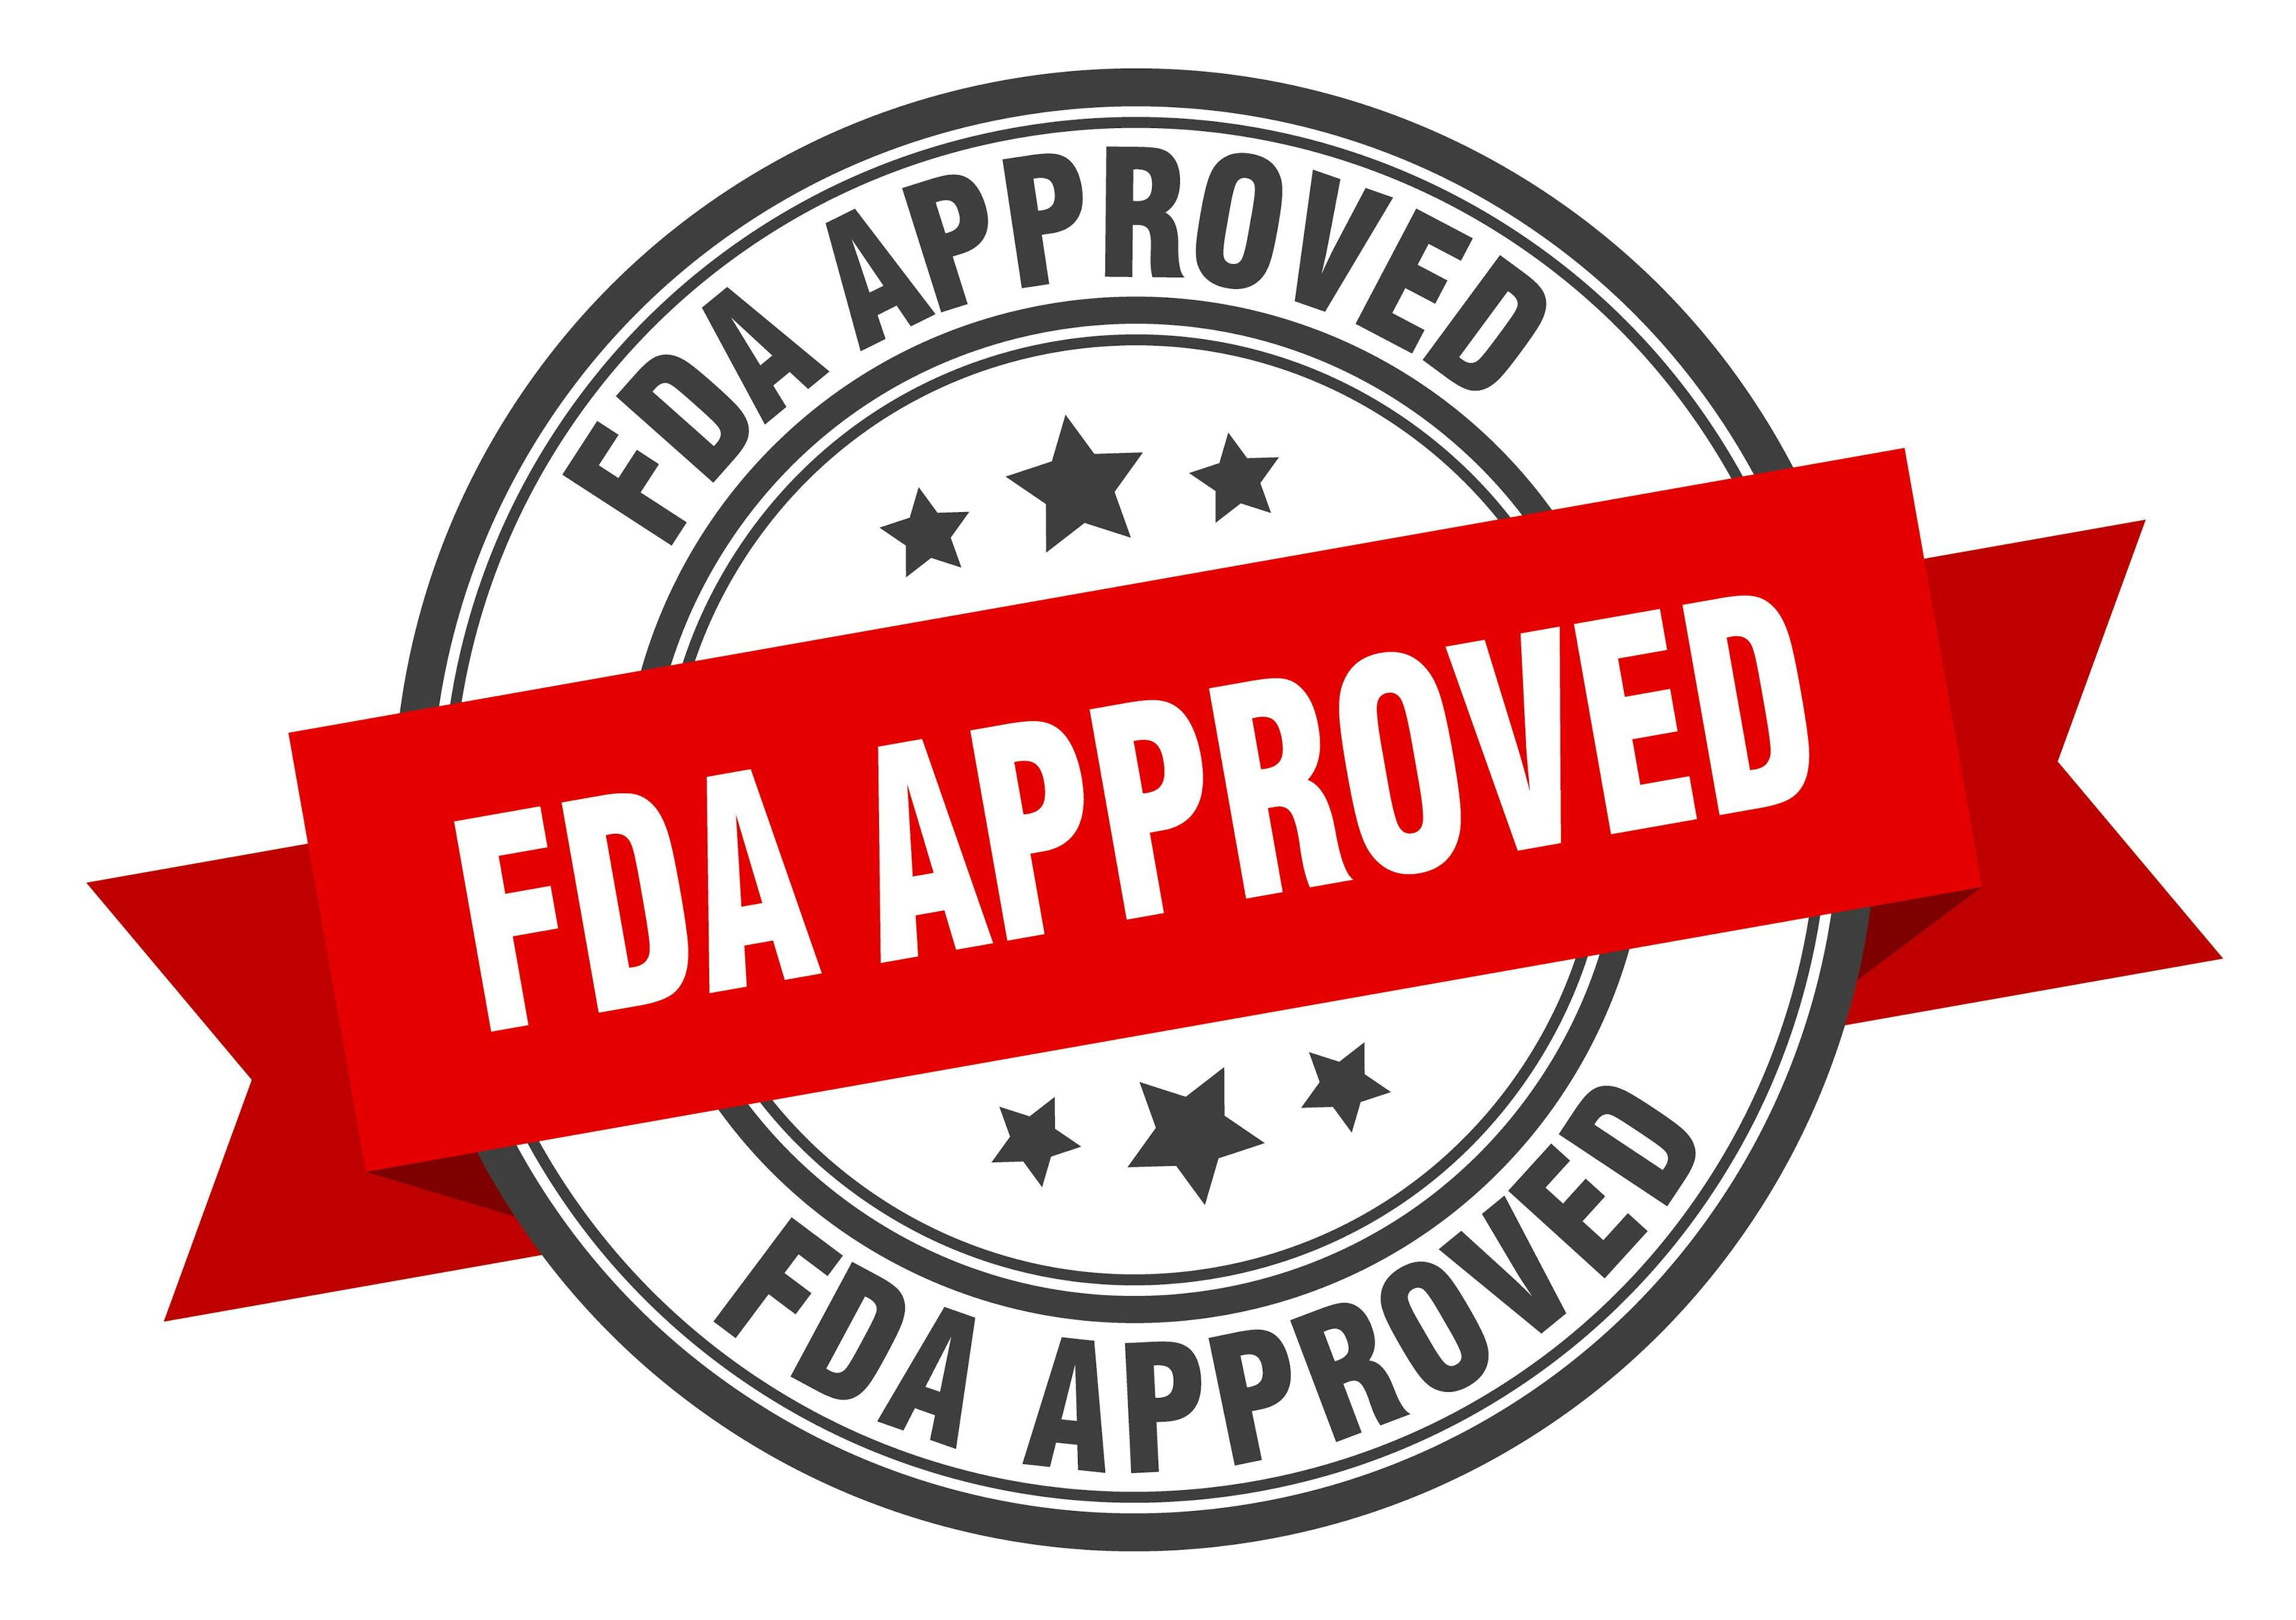 FDA Approval | Image credit: Aquir - stock.adobe.com